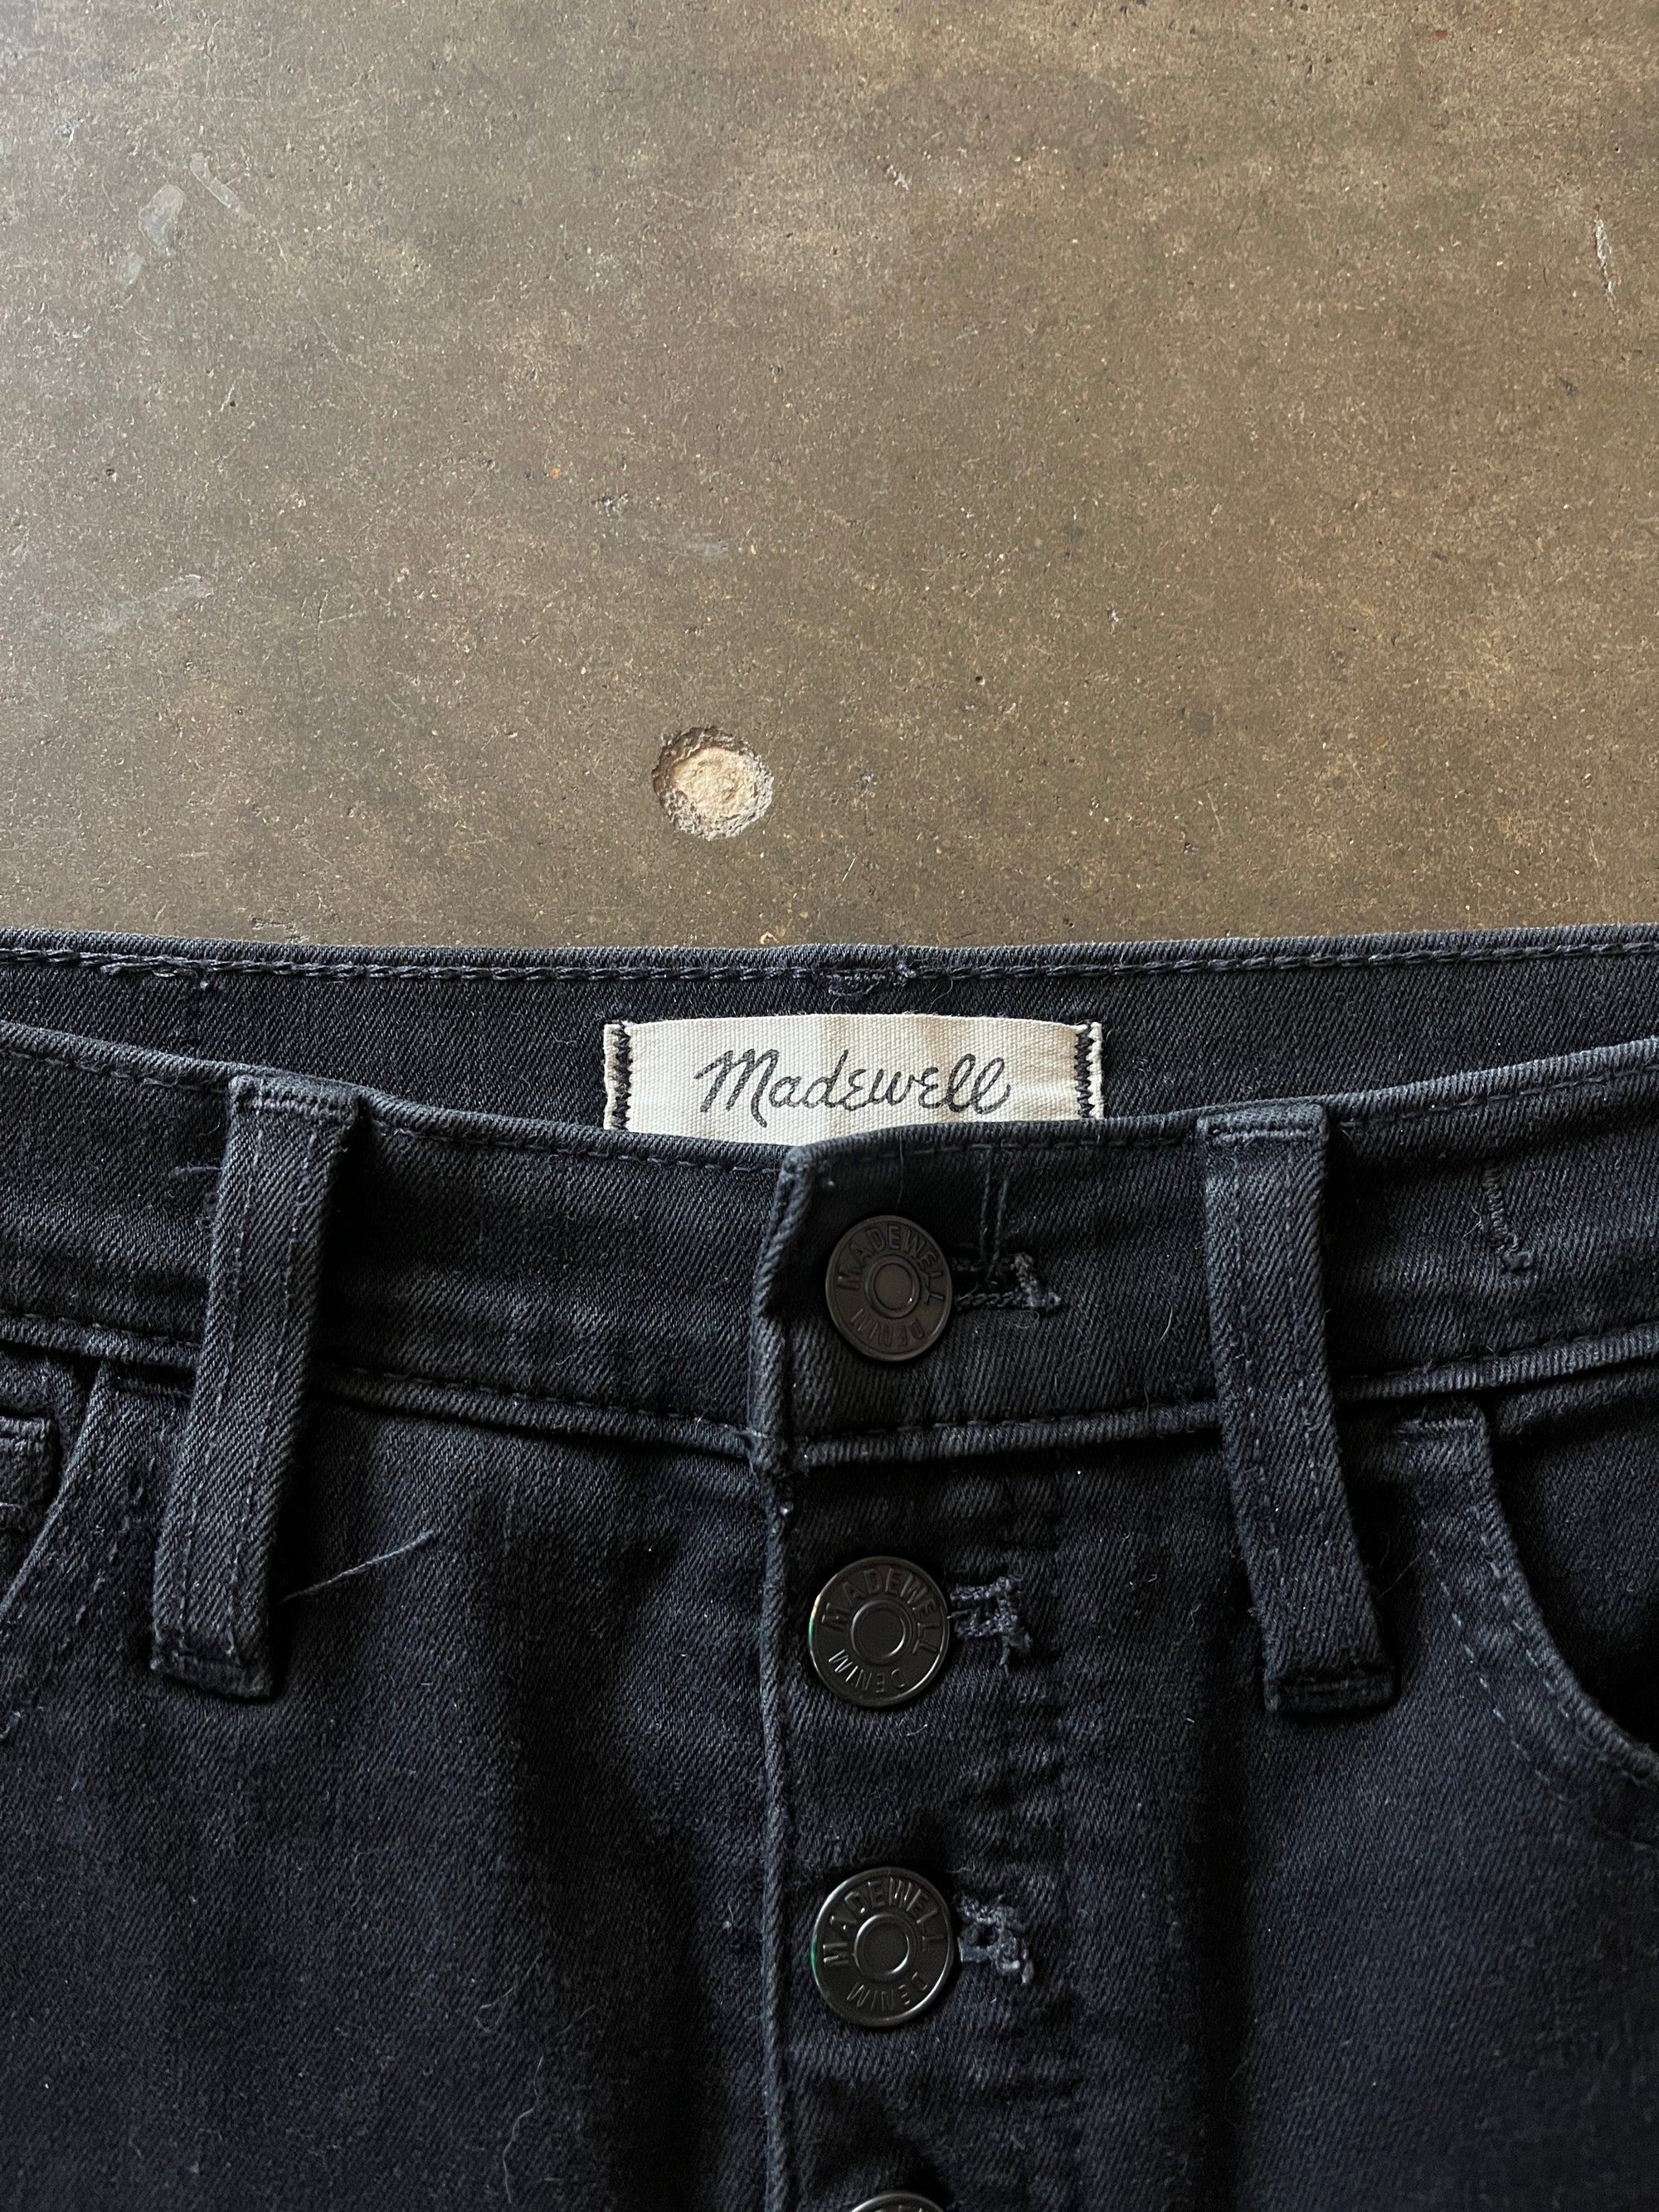 Madewell Distressed Black Skinny Jeans